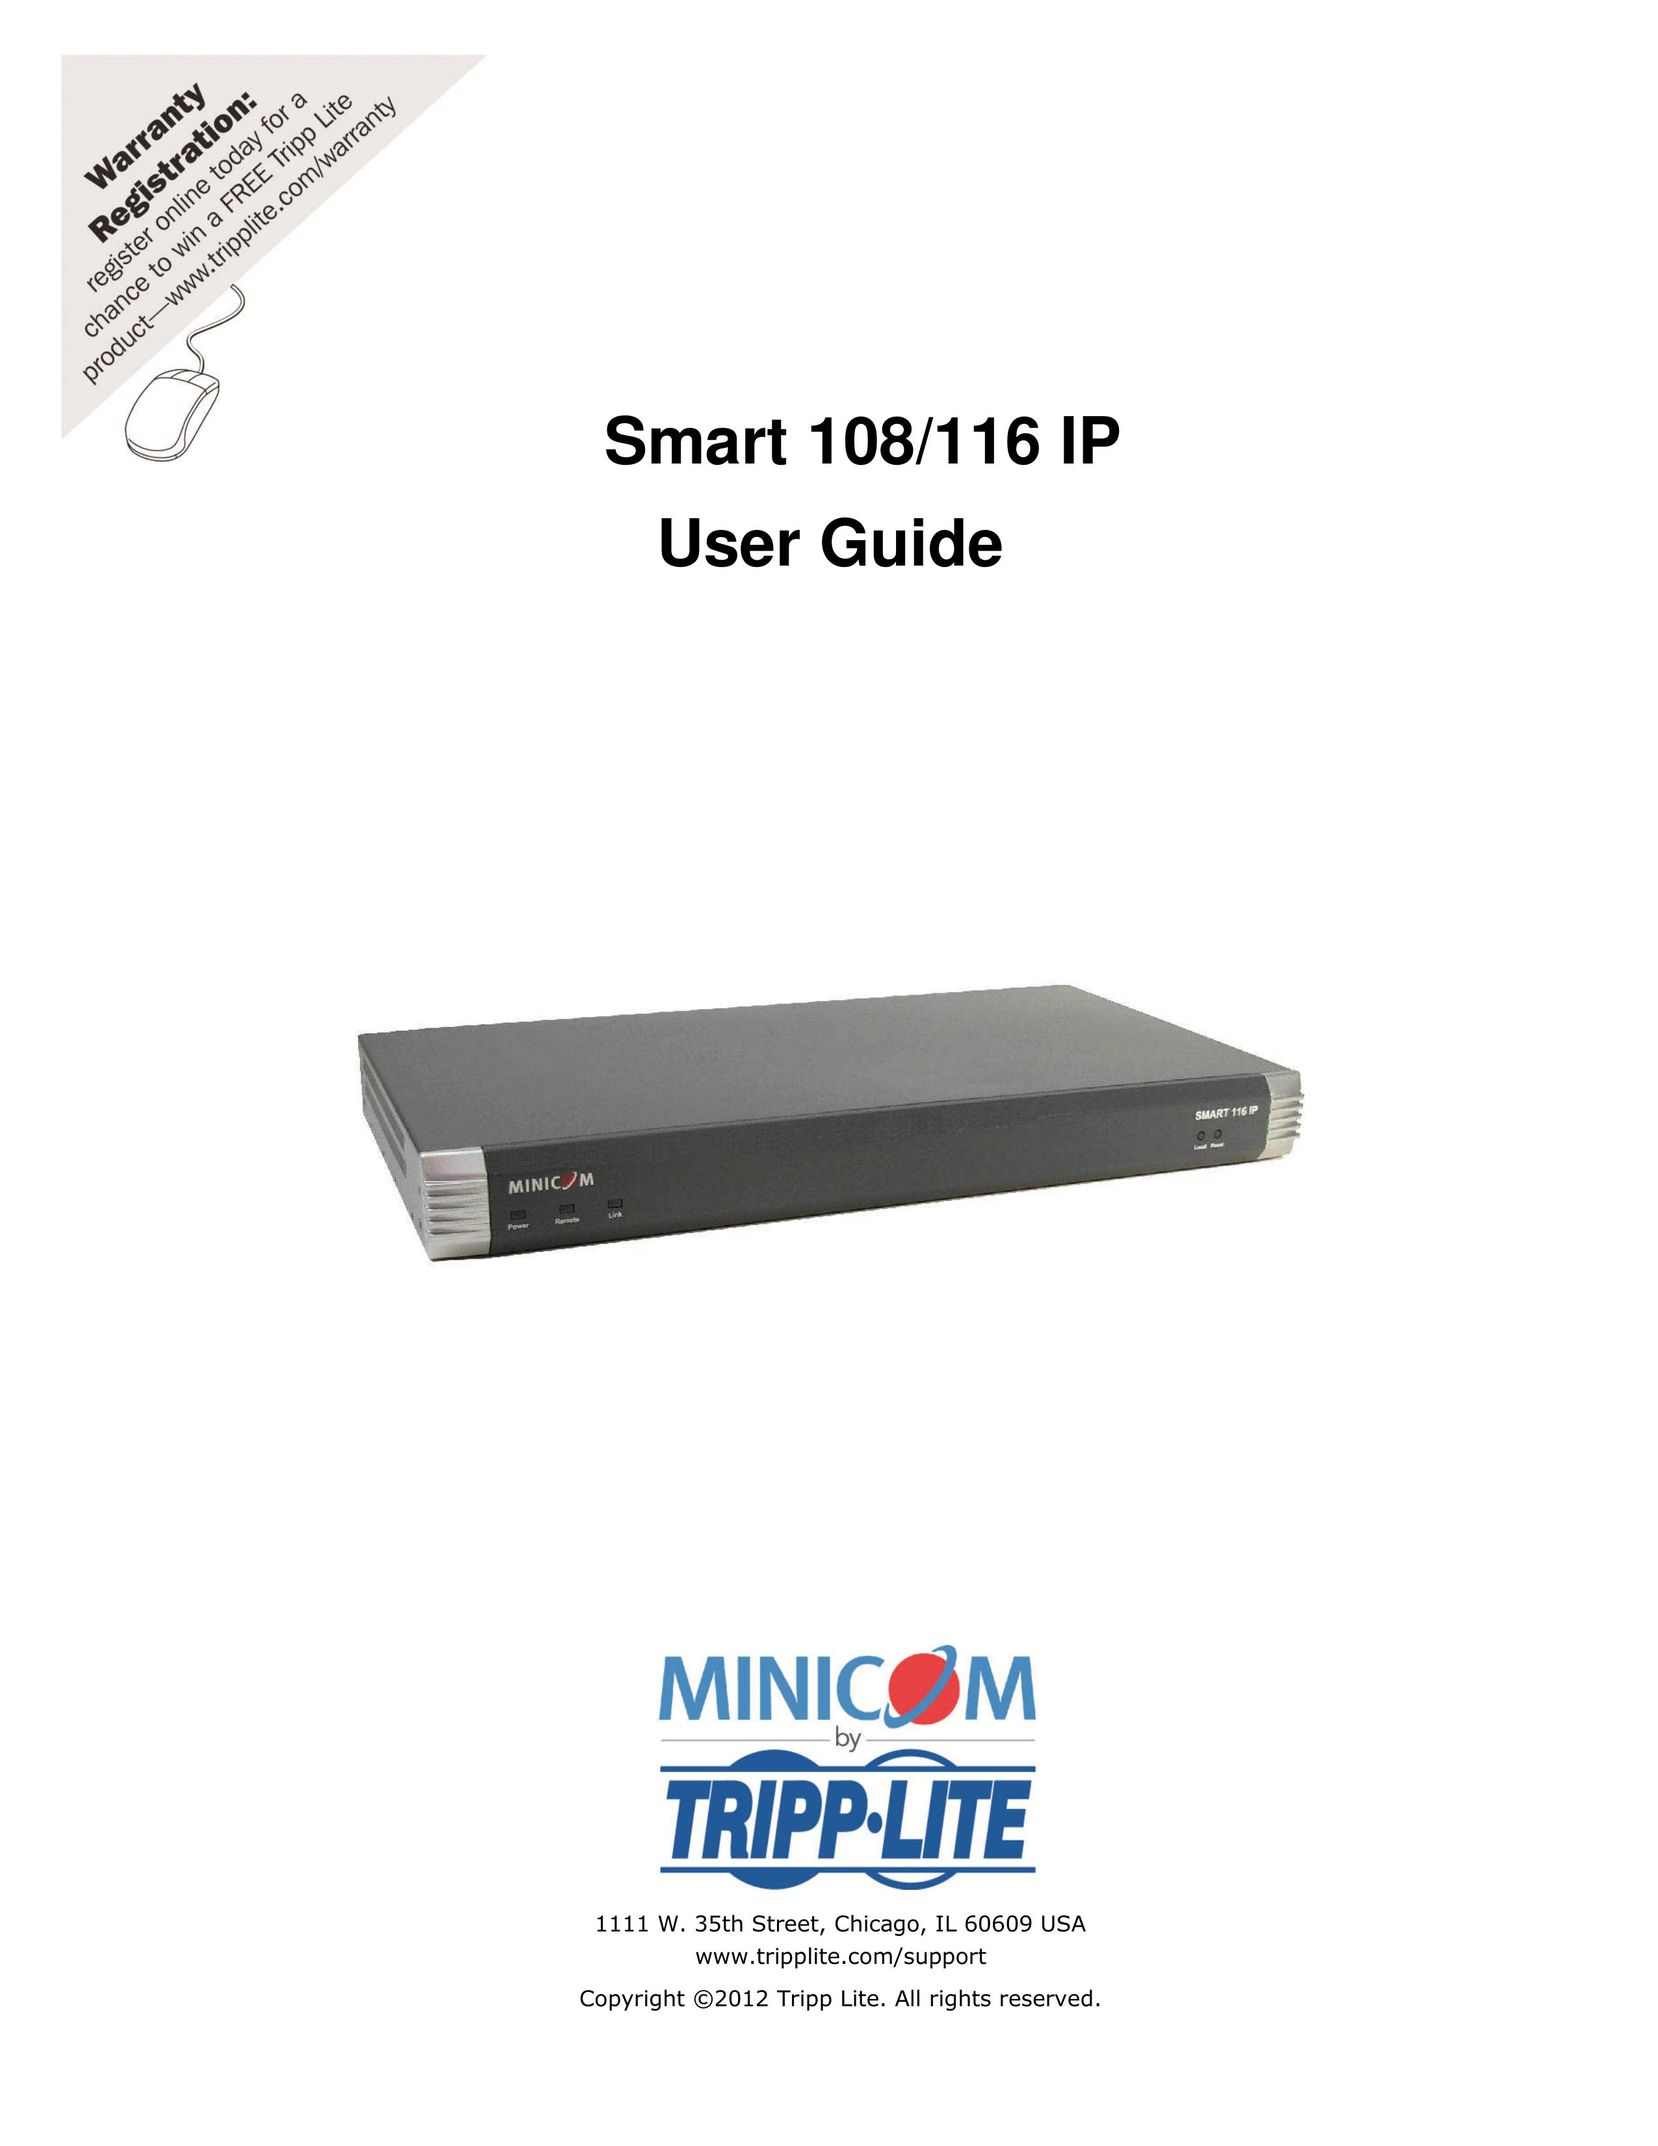 Minicom Advanced Systems 108/116 IP Switch User Manual